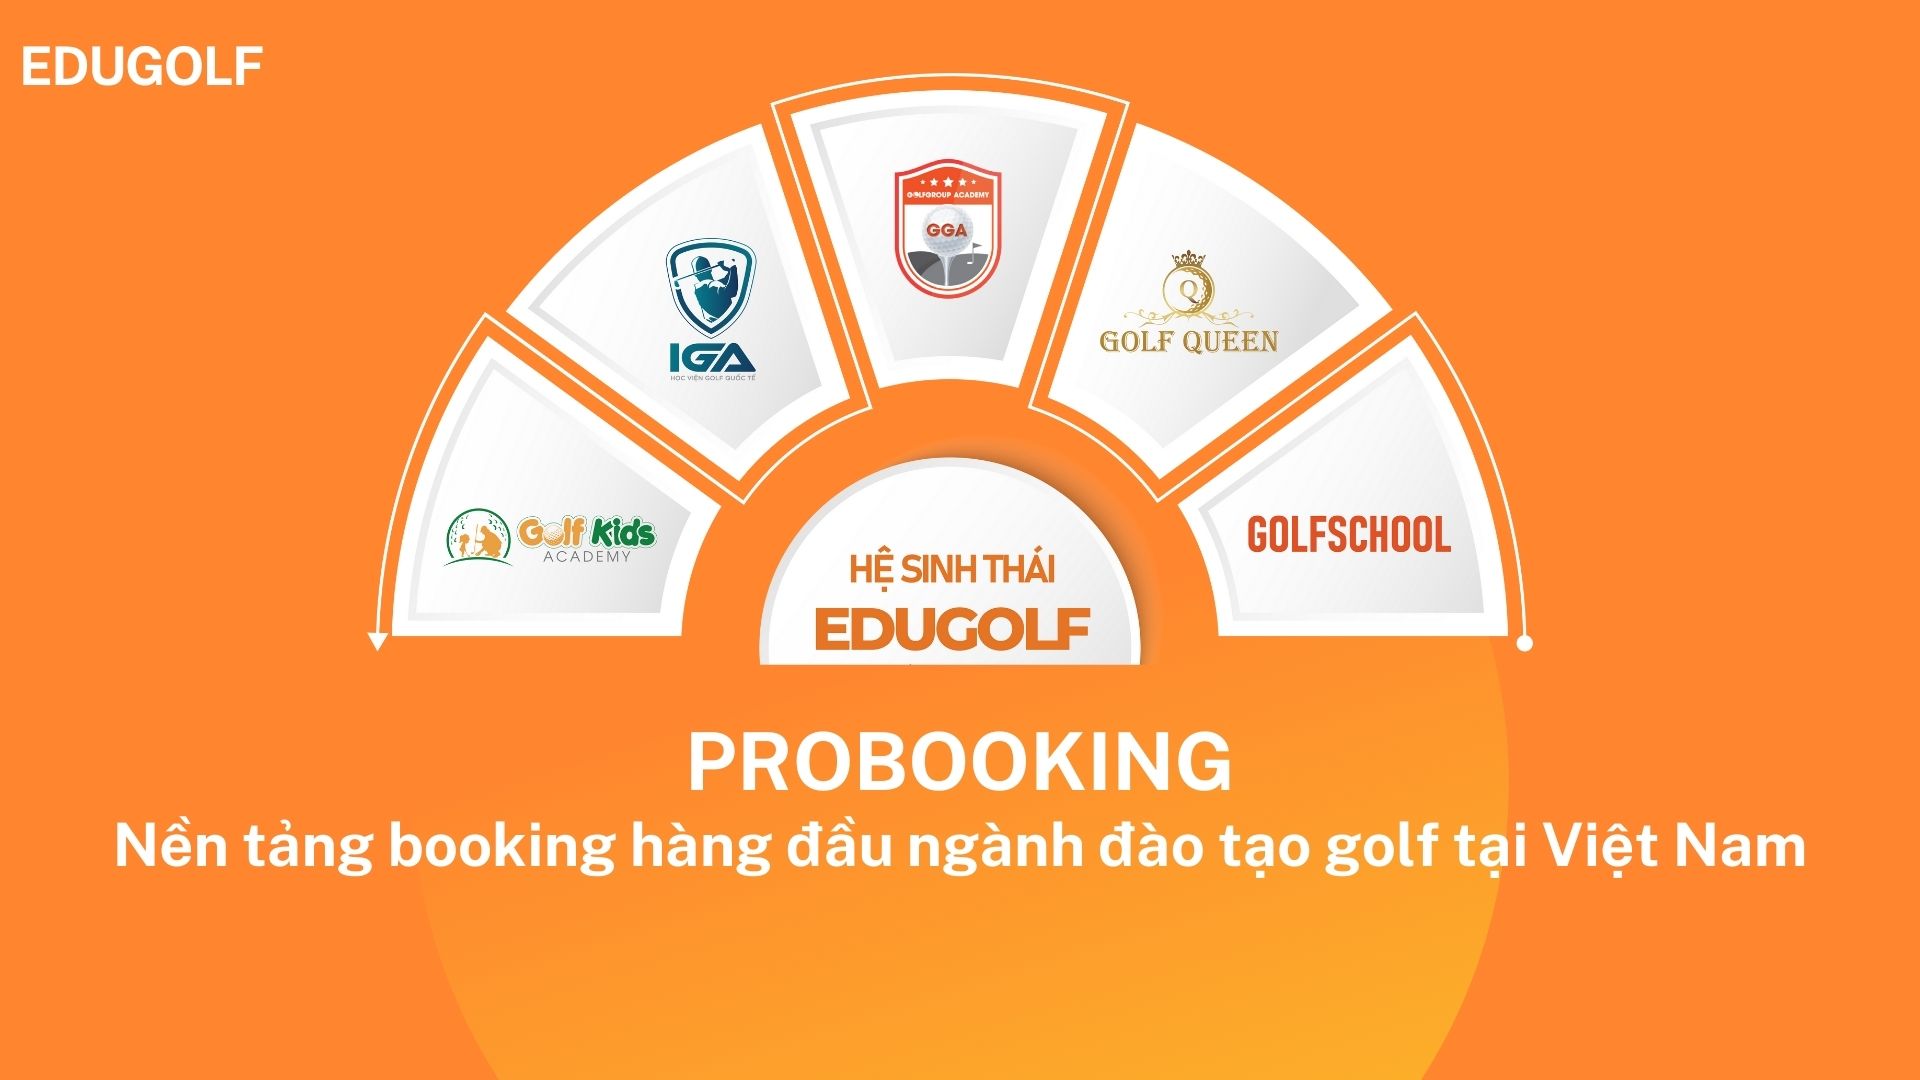 edugolf ra mắt ứng dụng pro booking